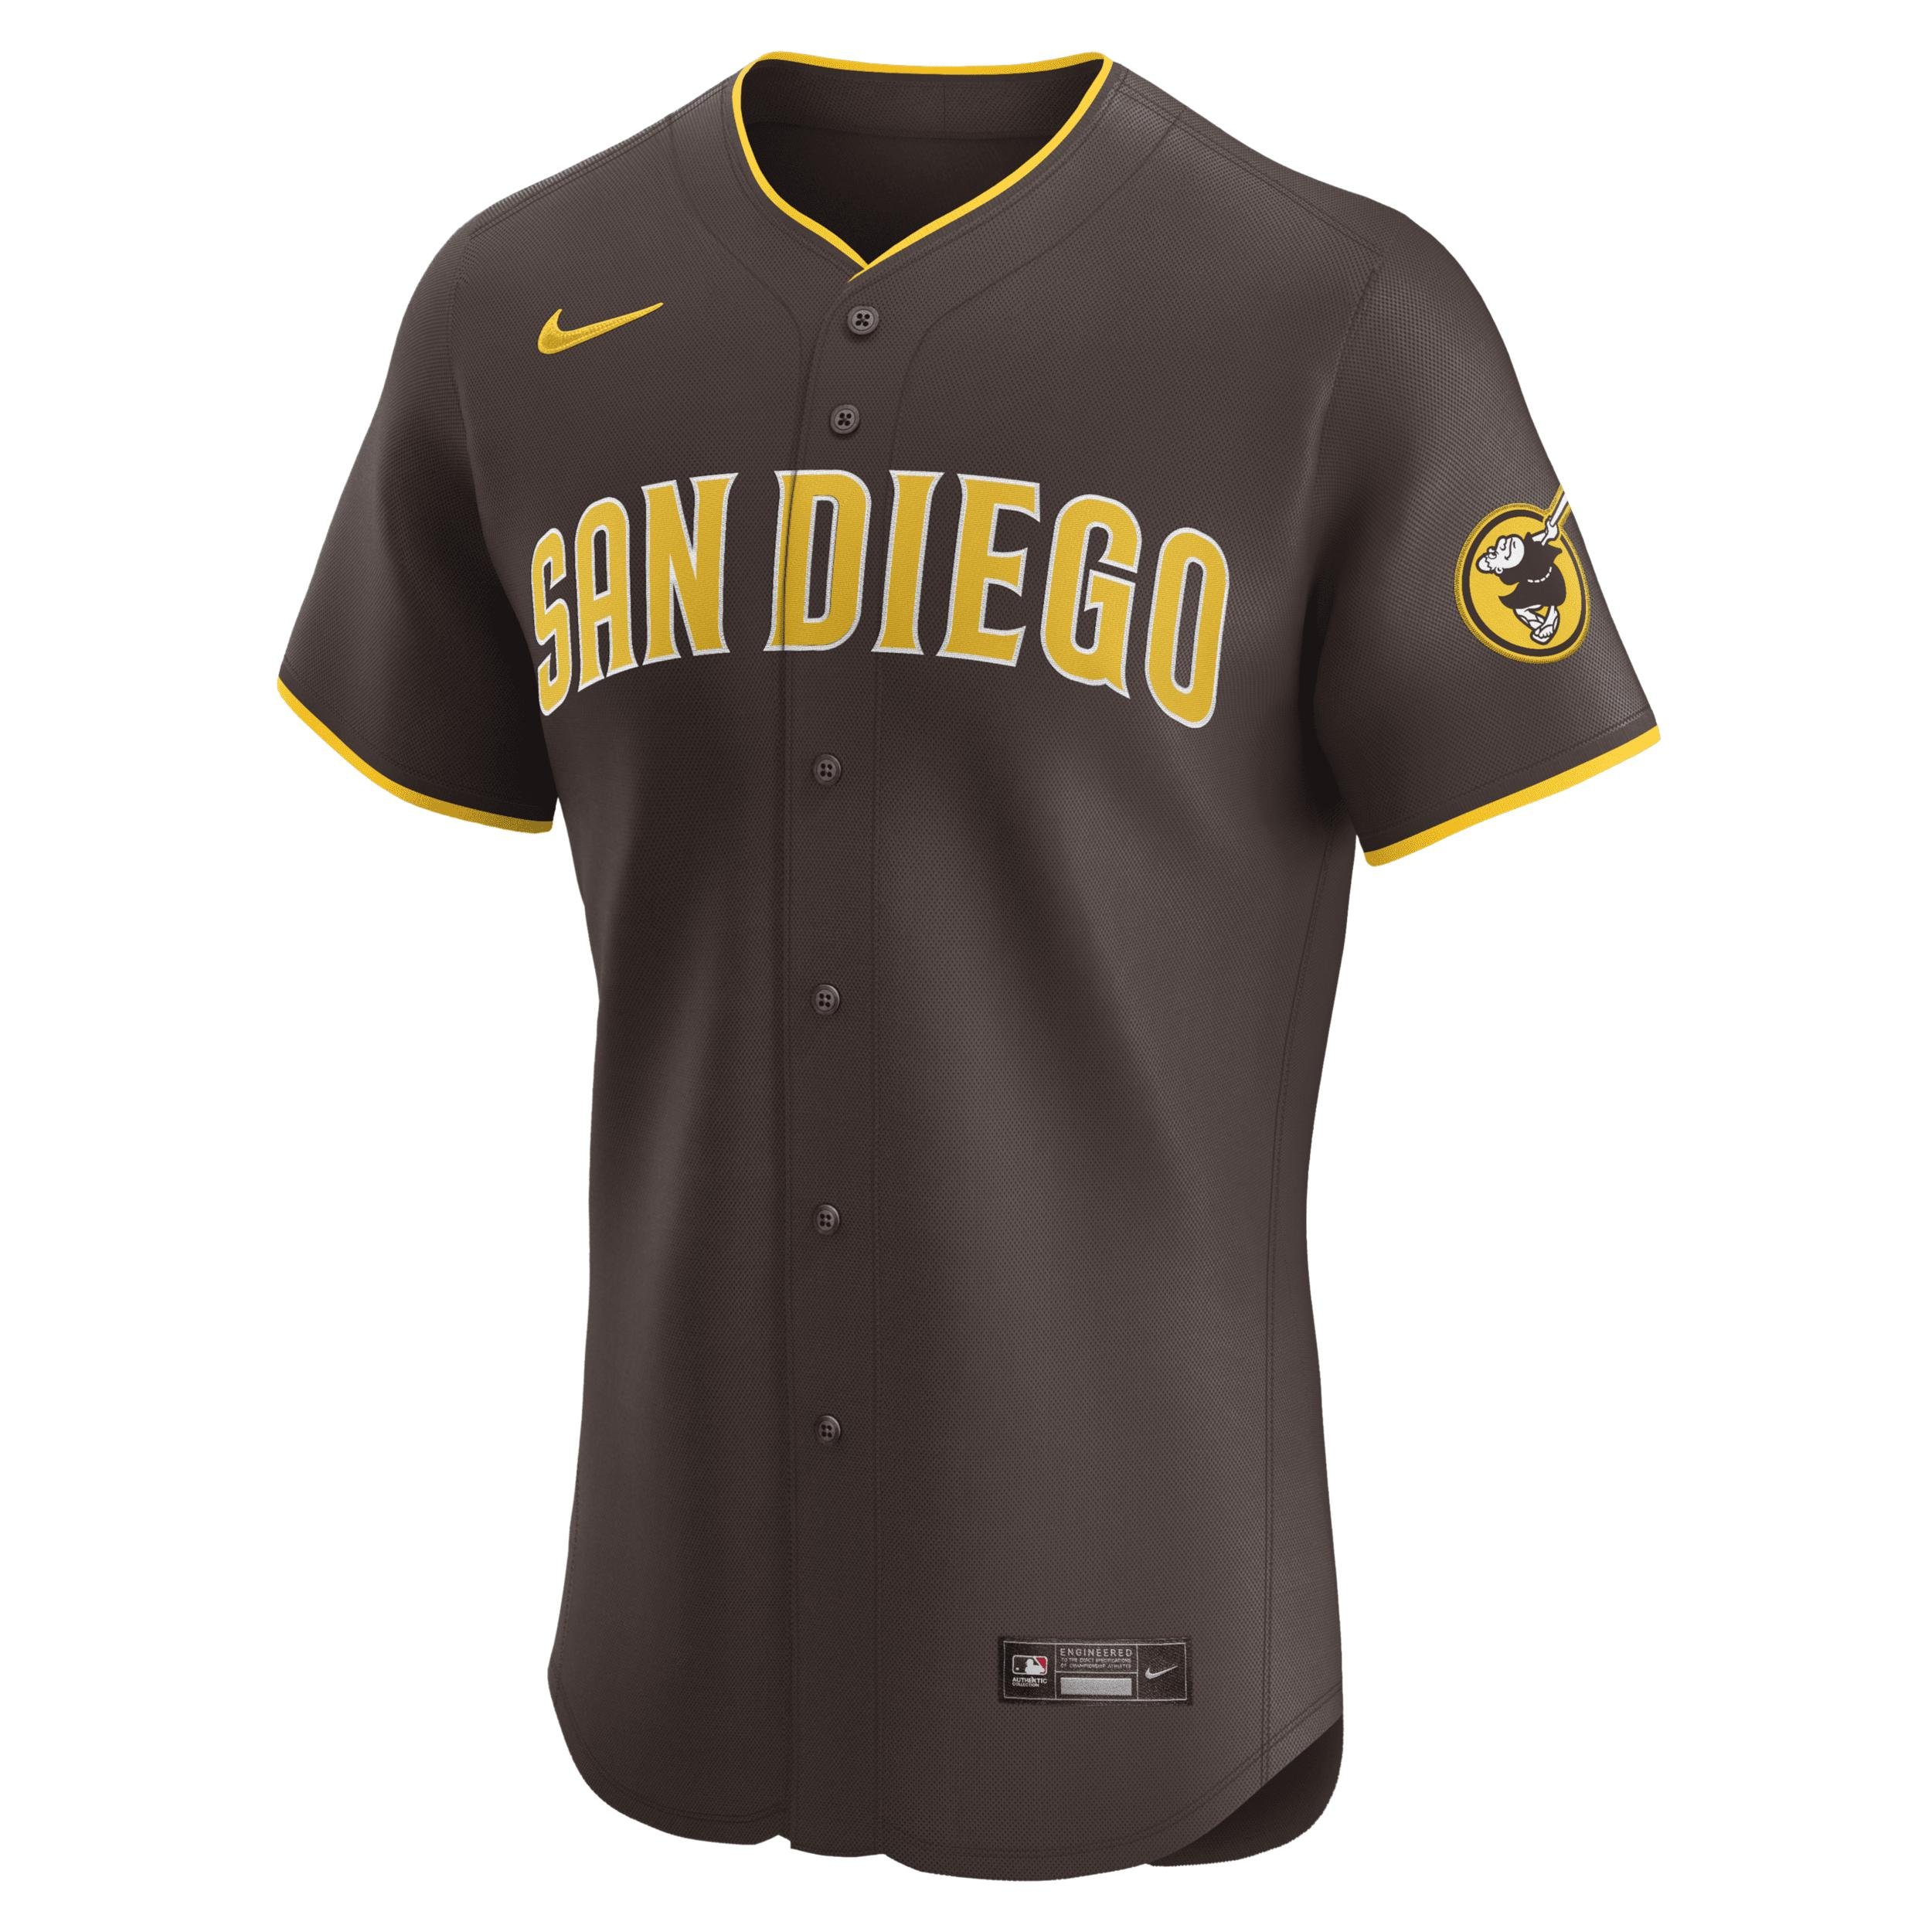 San Diego Padres Nike Men's Dri-FIT ADV MLB Elite Jersey by NIKE